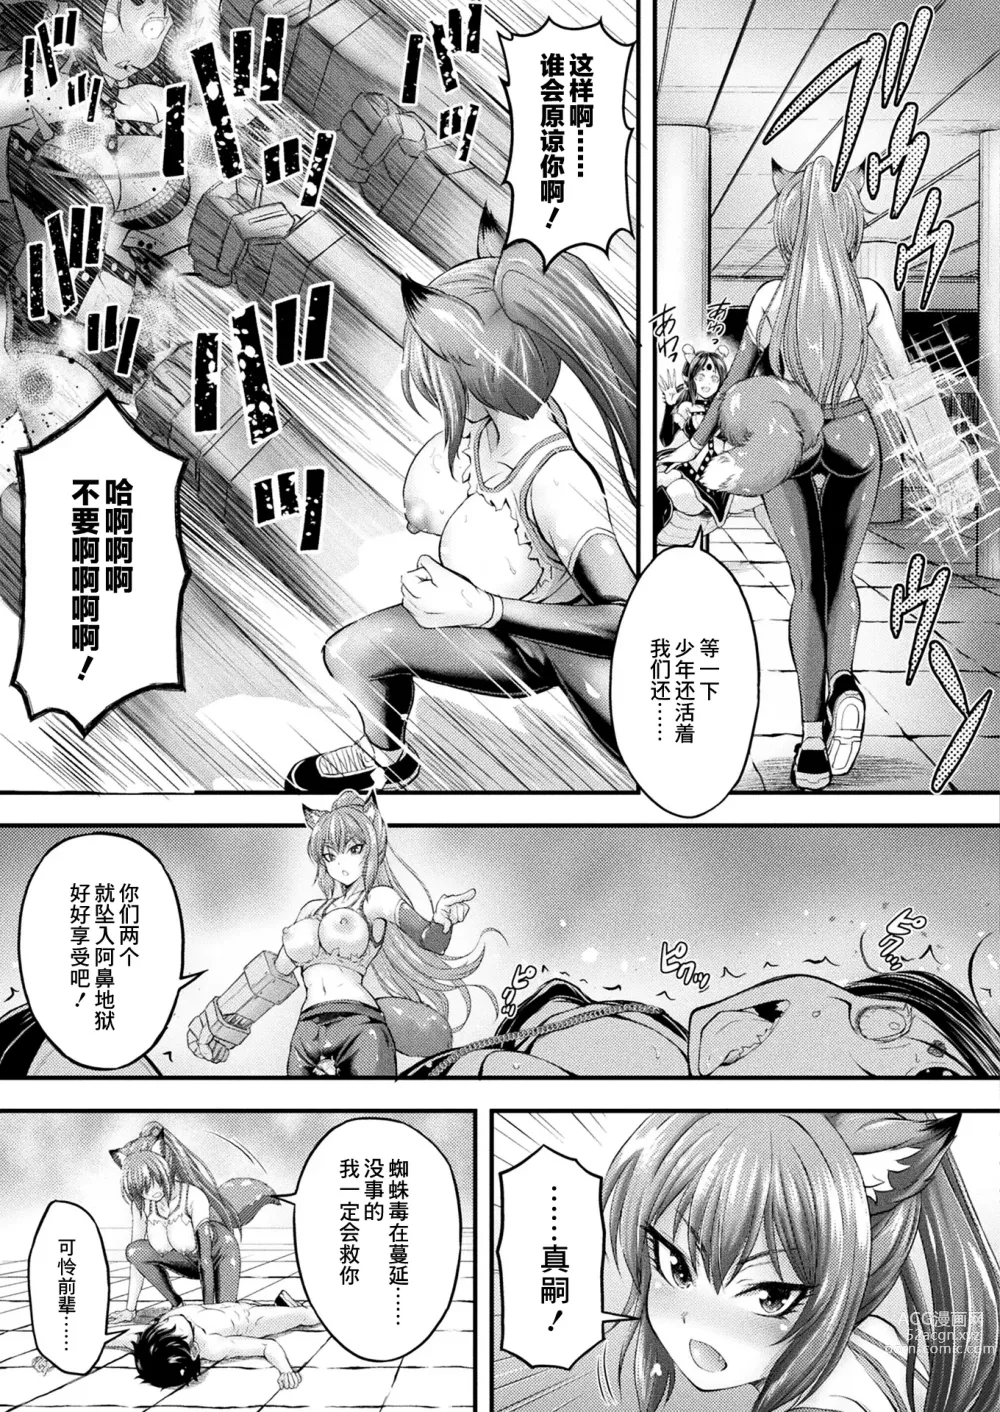 Page 15 of manga Felon Chaser Youko Kuzunoha Karen Kikiippatsu